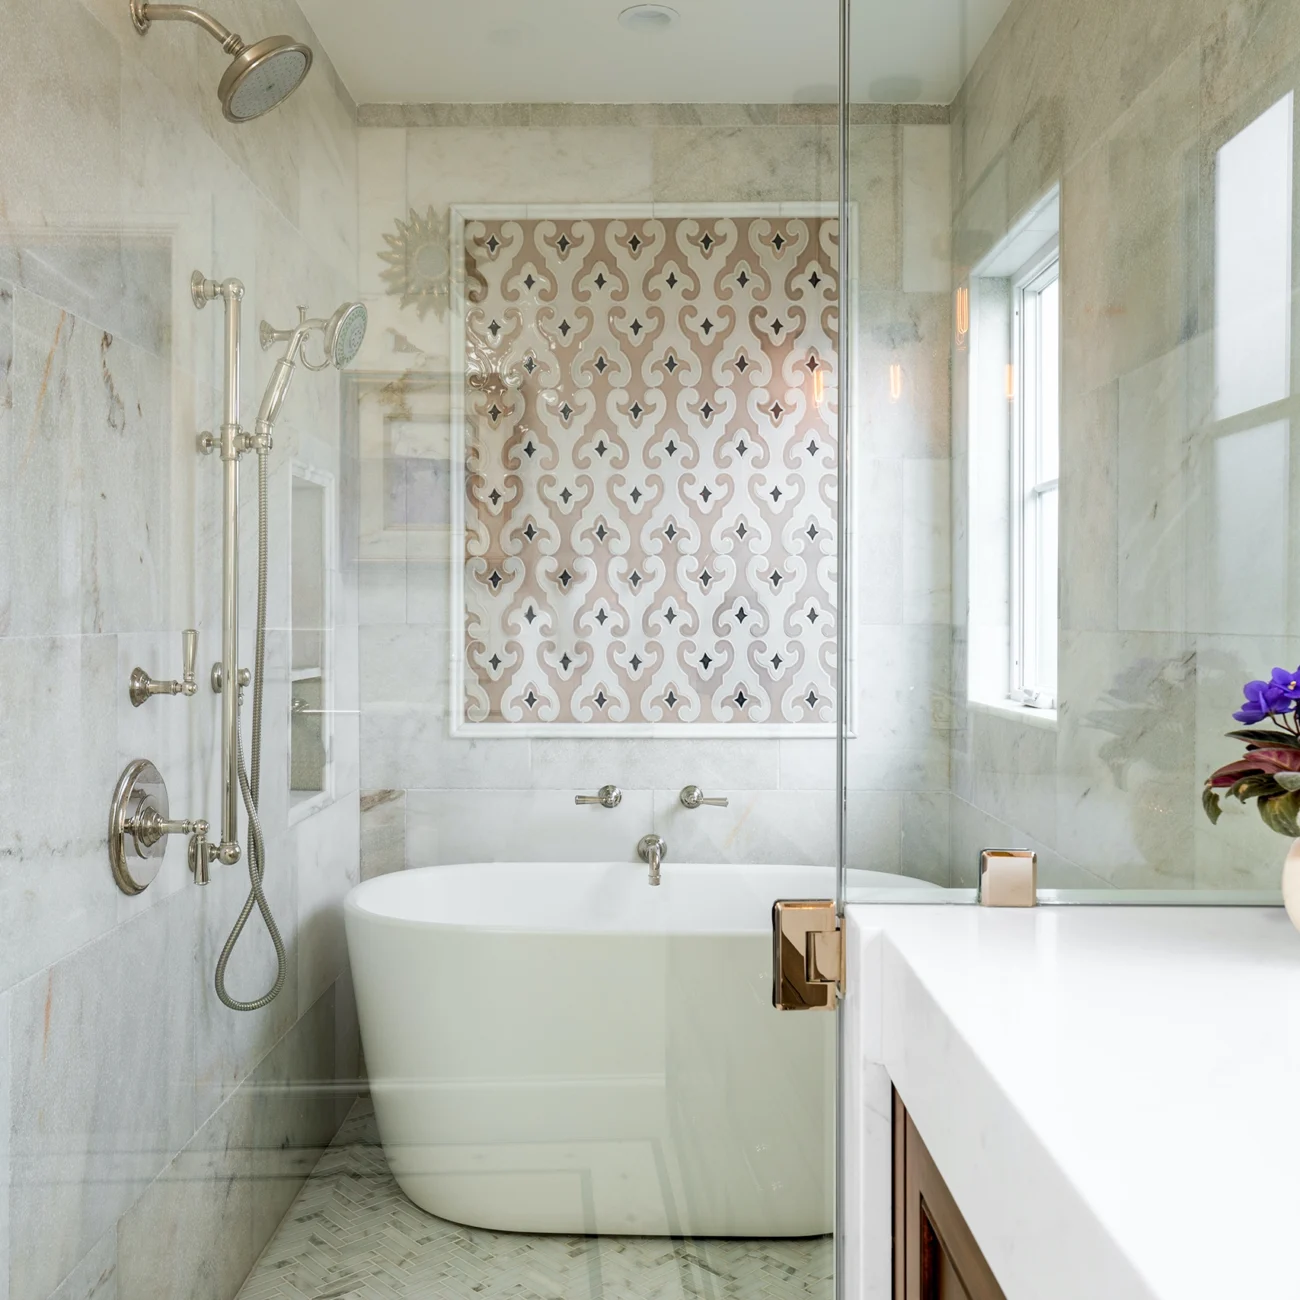 Christine Vroom Interiors | Via Arriba | Bright white bathroom with soaker tub and Spanish tile backsplash